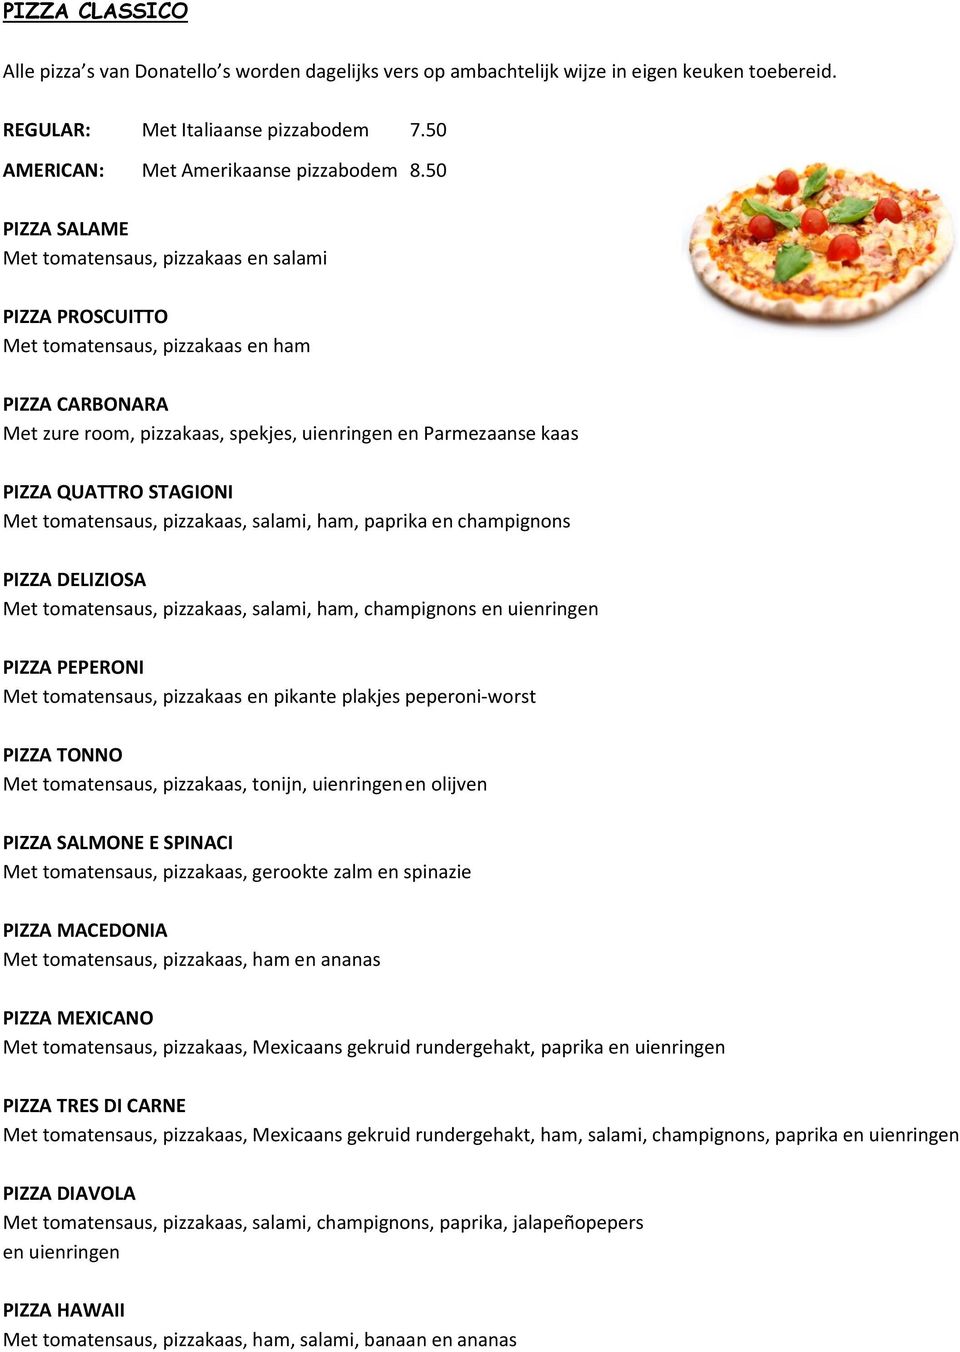 STAGIONI Met tomatensaus, pizzakaas, salami, ham, paprika en champignons PIZZA DELIZIOSA Met tomatensaus, pizzakaas, salami, ham, champignons en uienringen PIZZA PEPERONI Met tomatensaus, pizzakaas